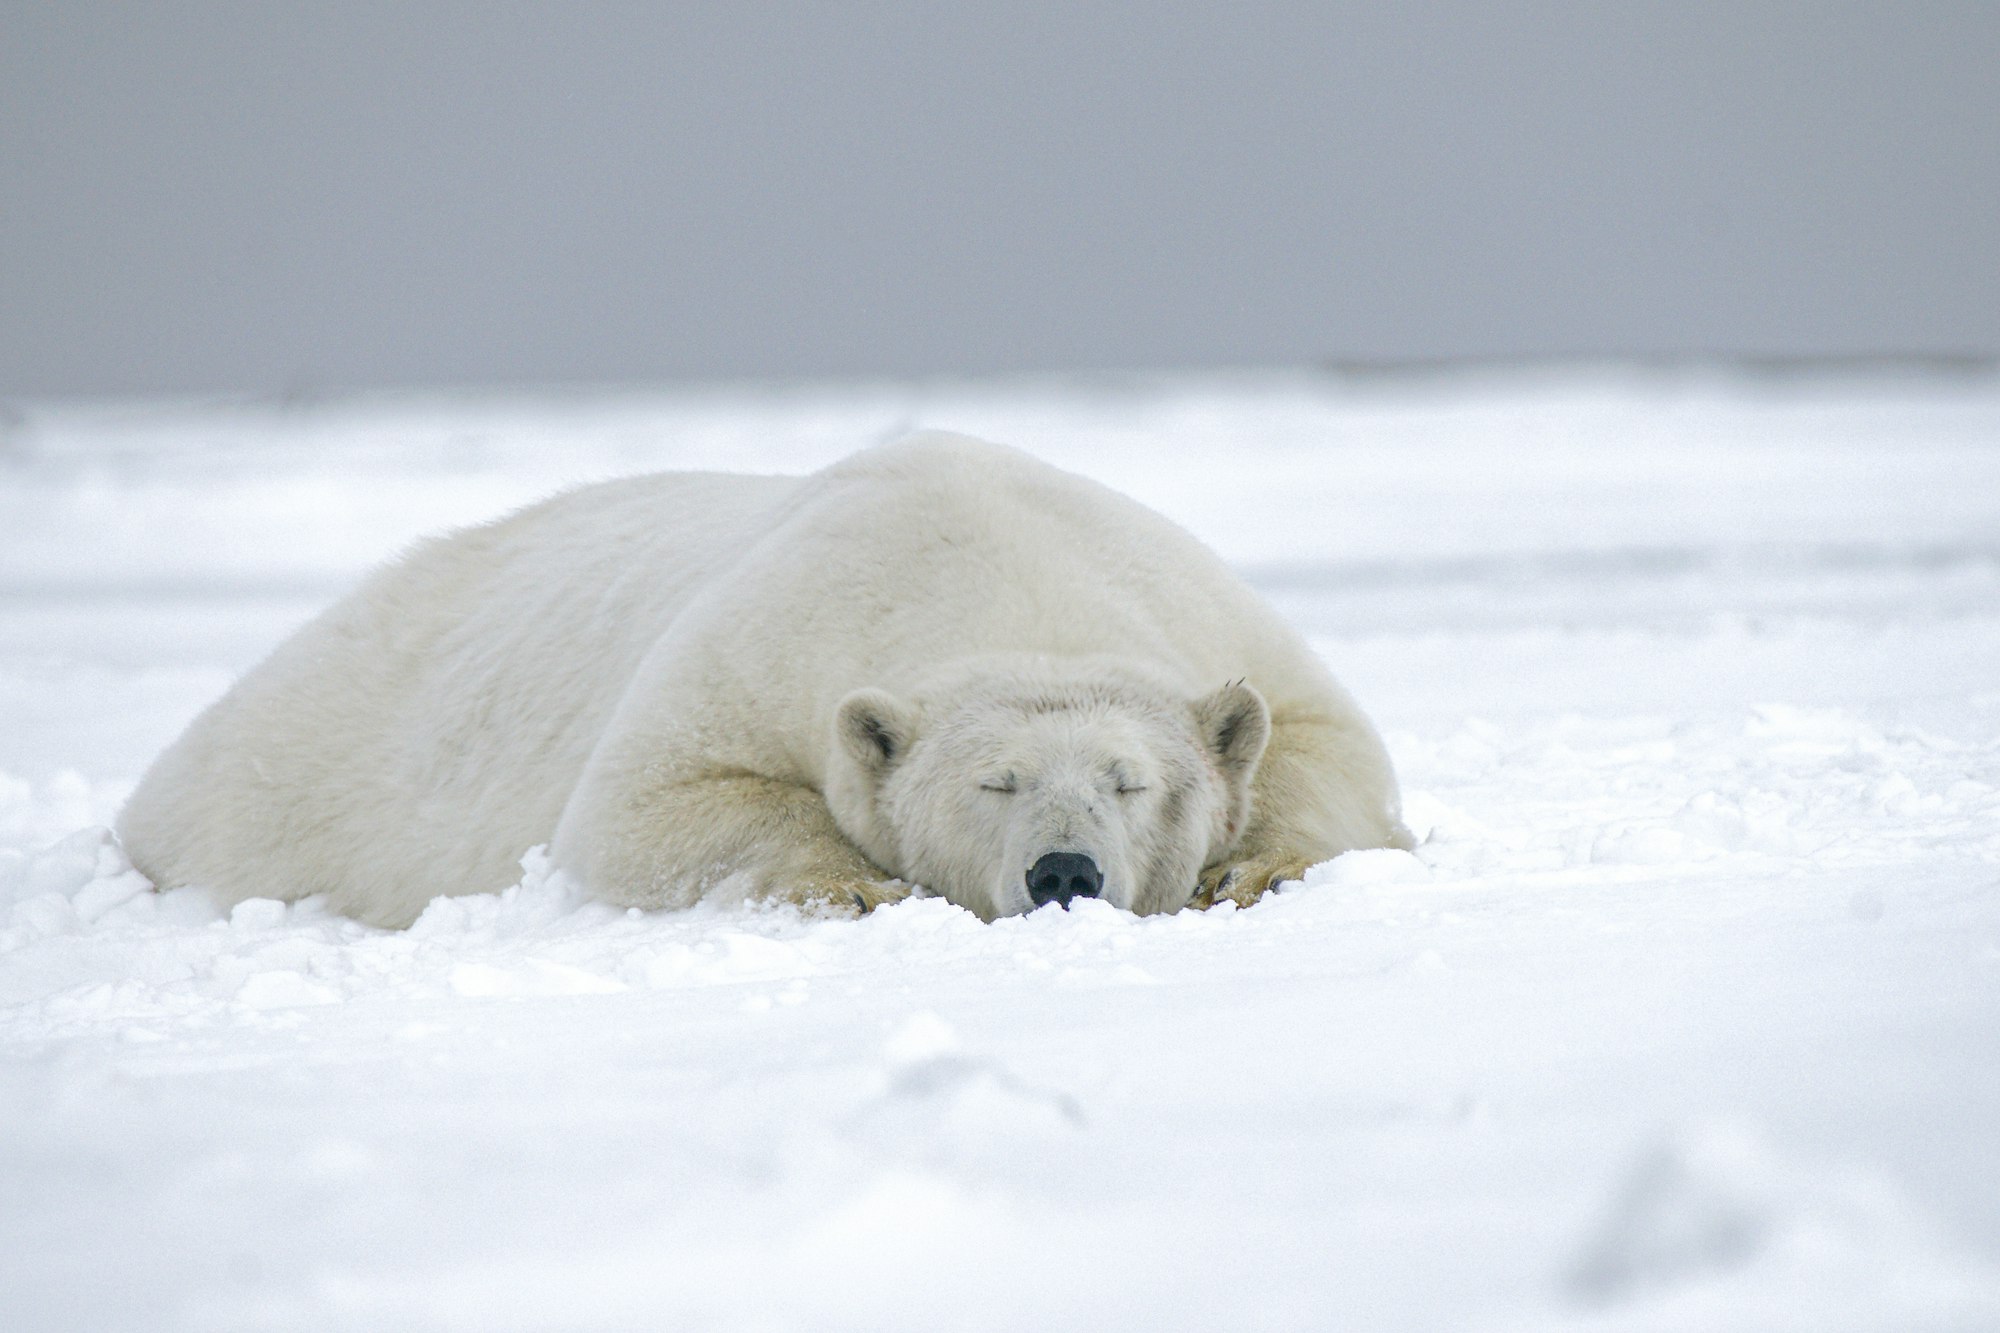 Polar bear sleeping (or pretending to sleep)